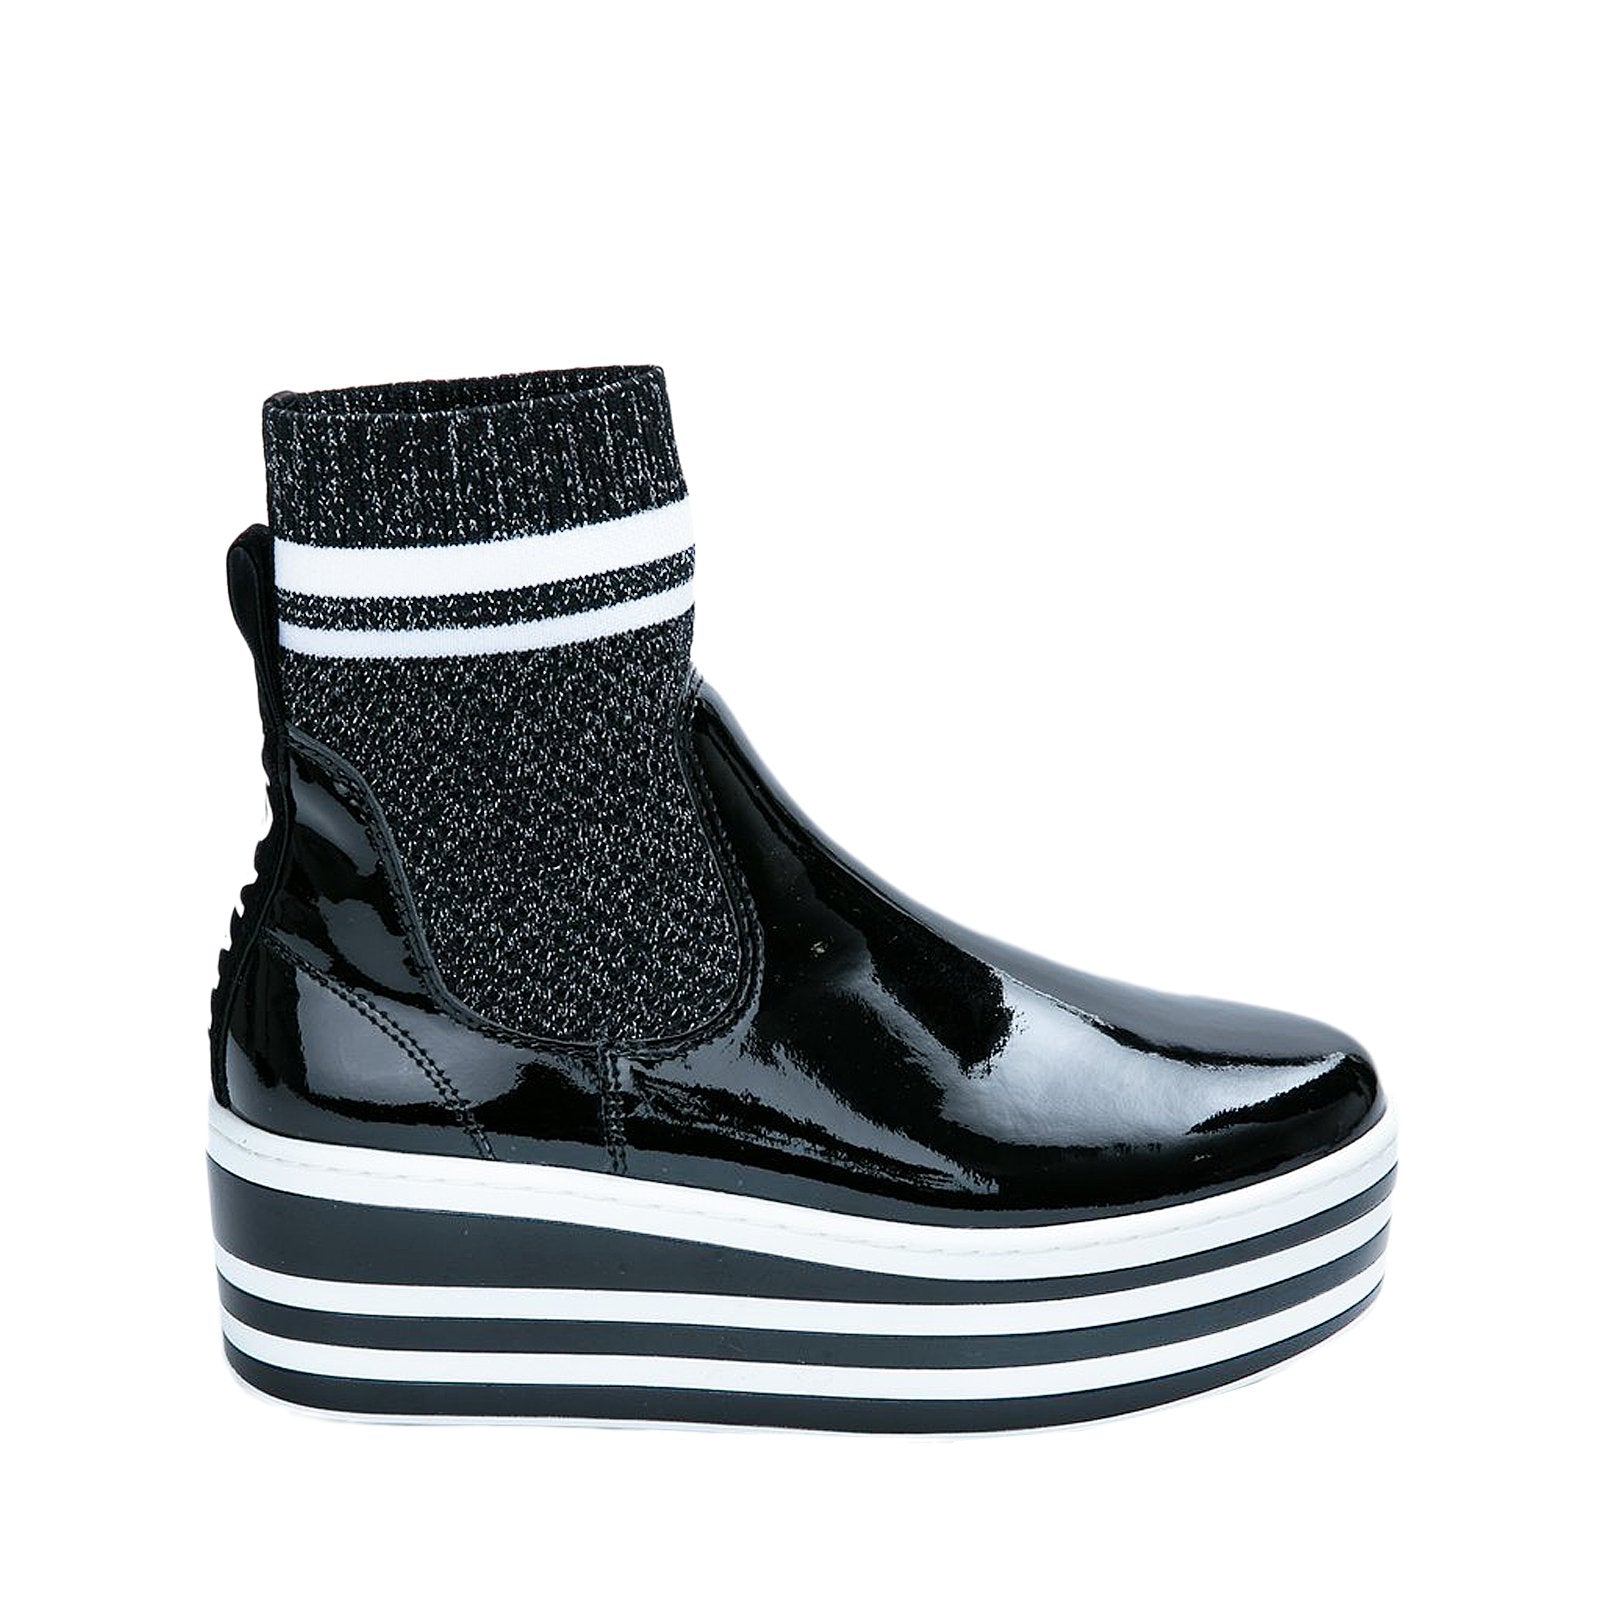 Boost Socks Patent Black Boots HNWCAK0415 - 1